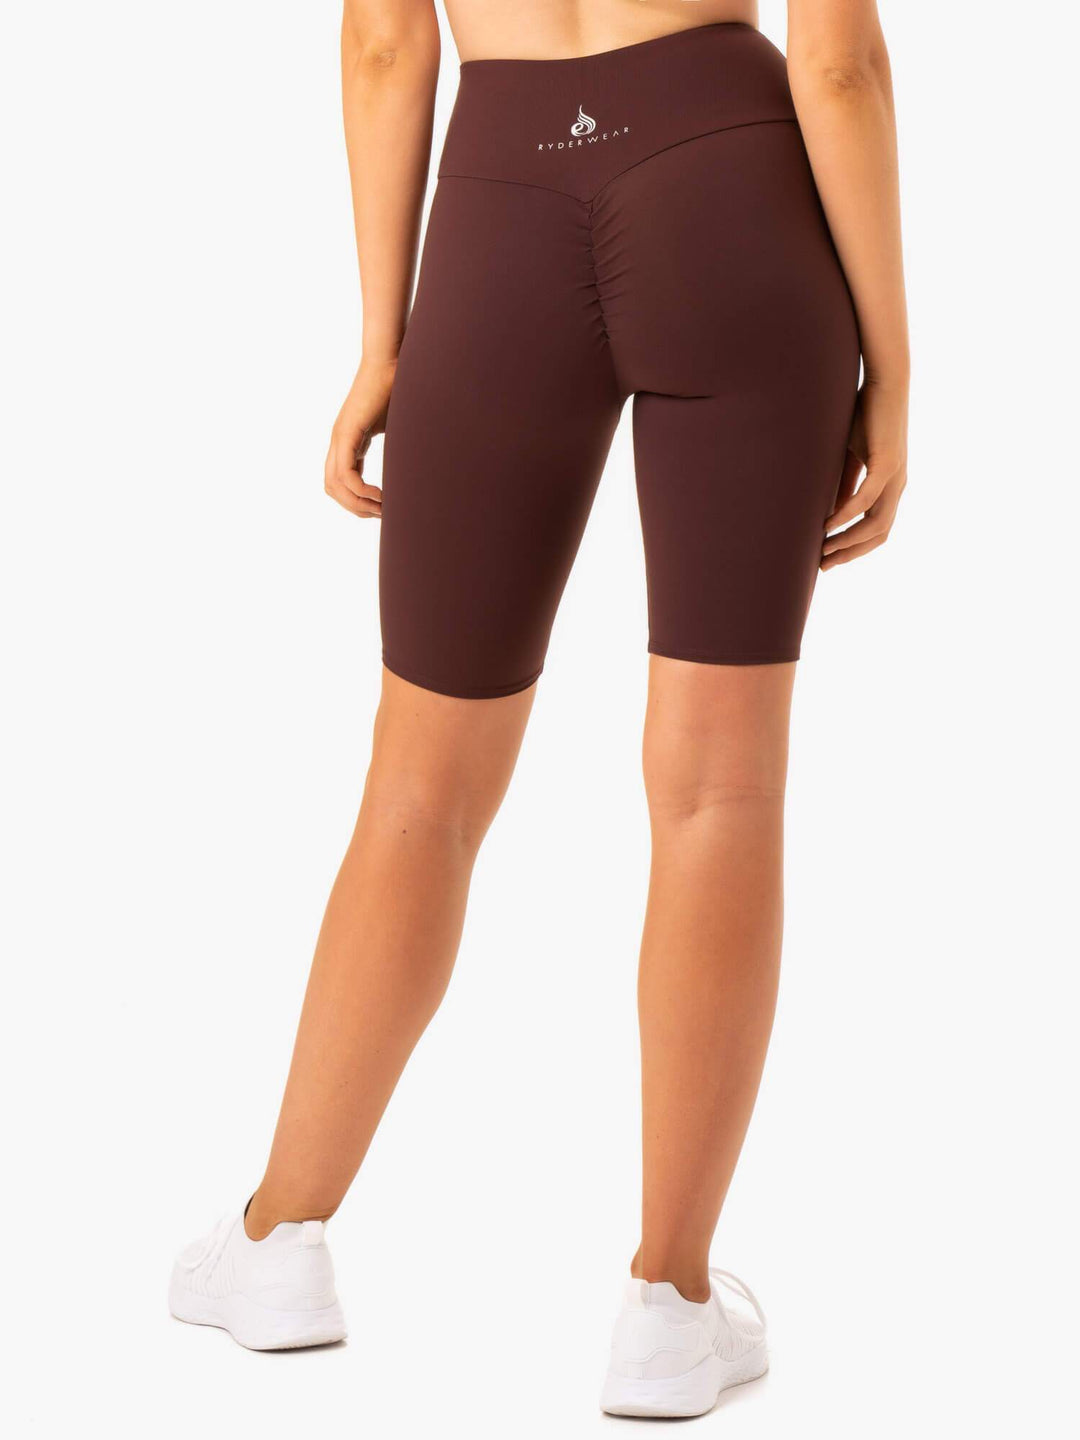 Staples Scrunch Bum Bike Shorts - Chocolate Clothing Ryderwear 